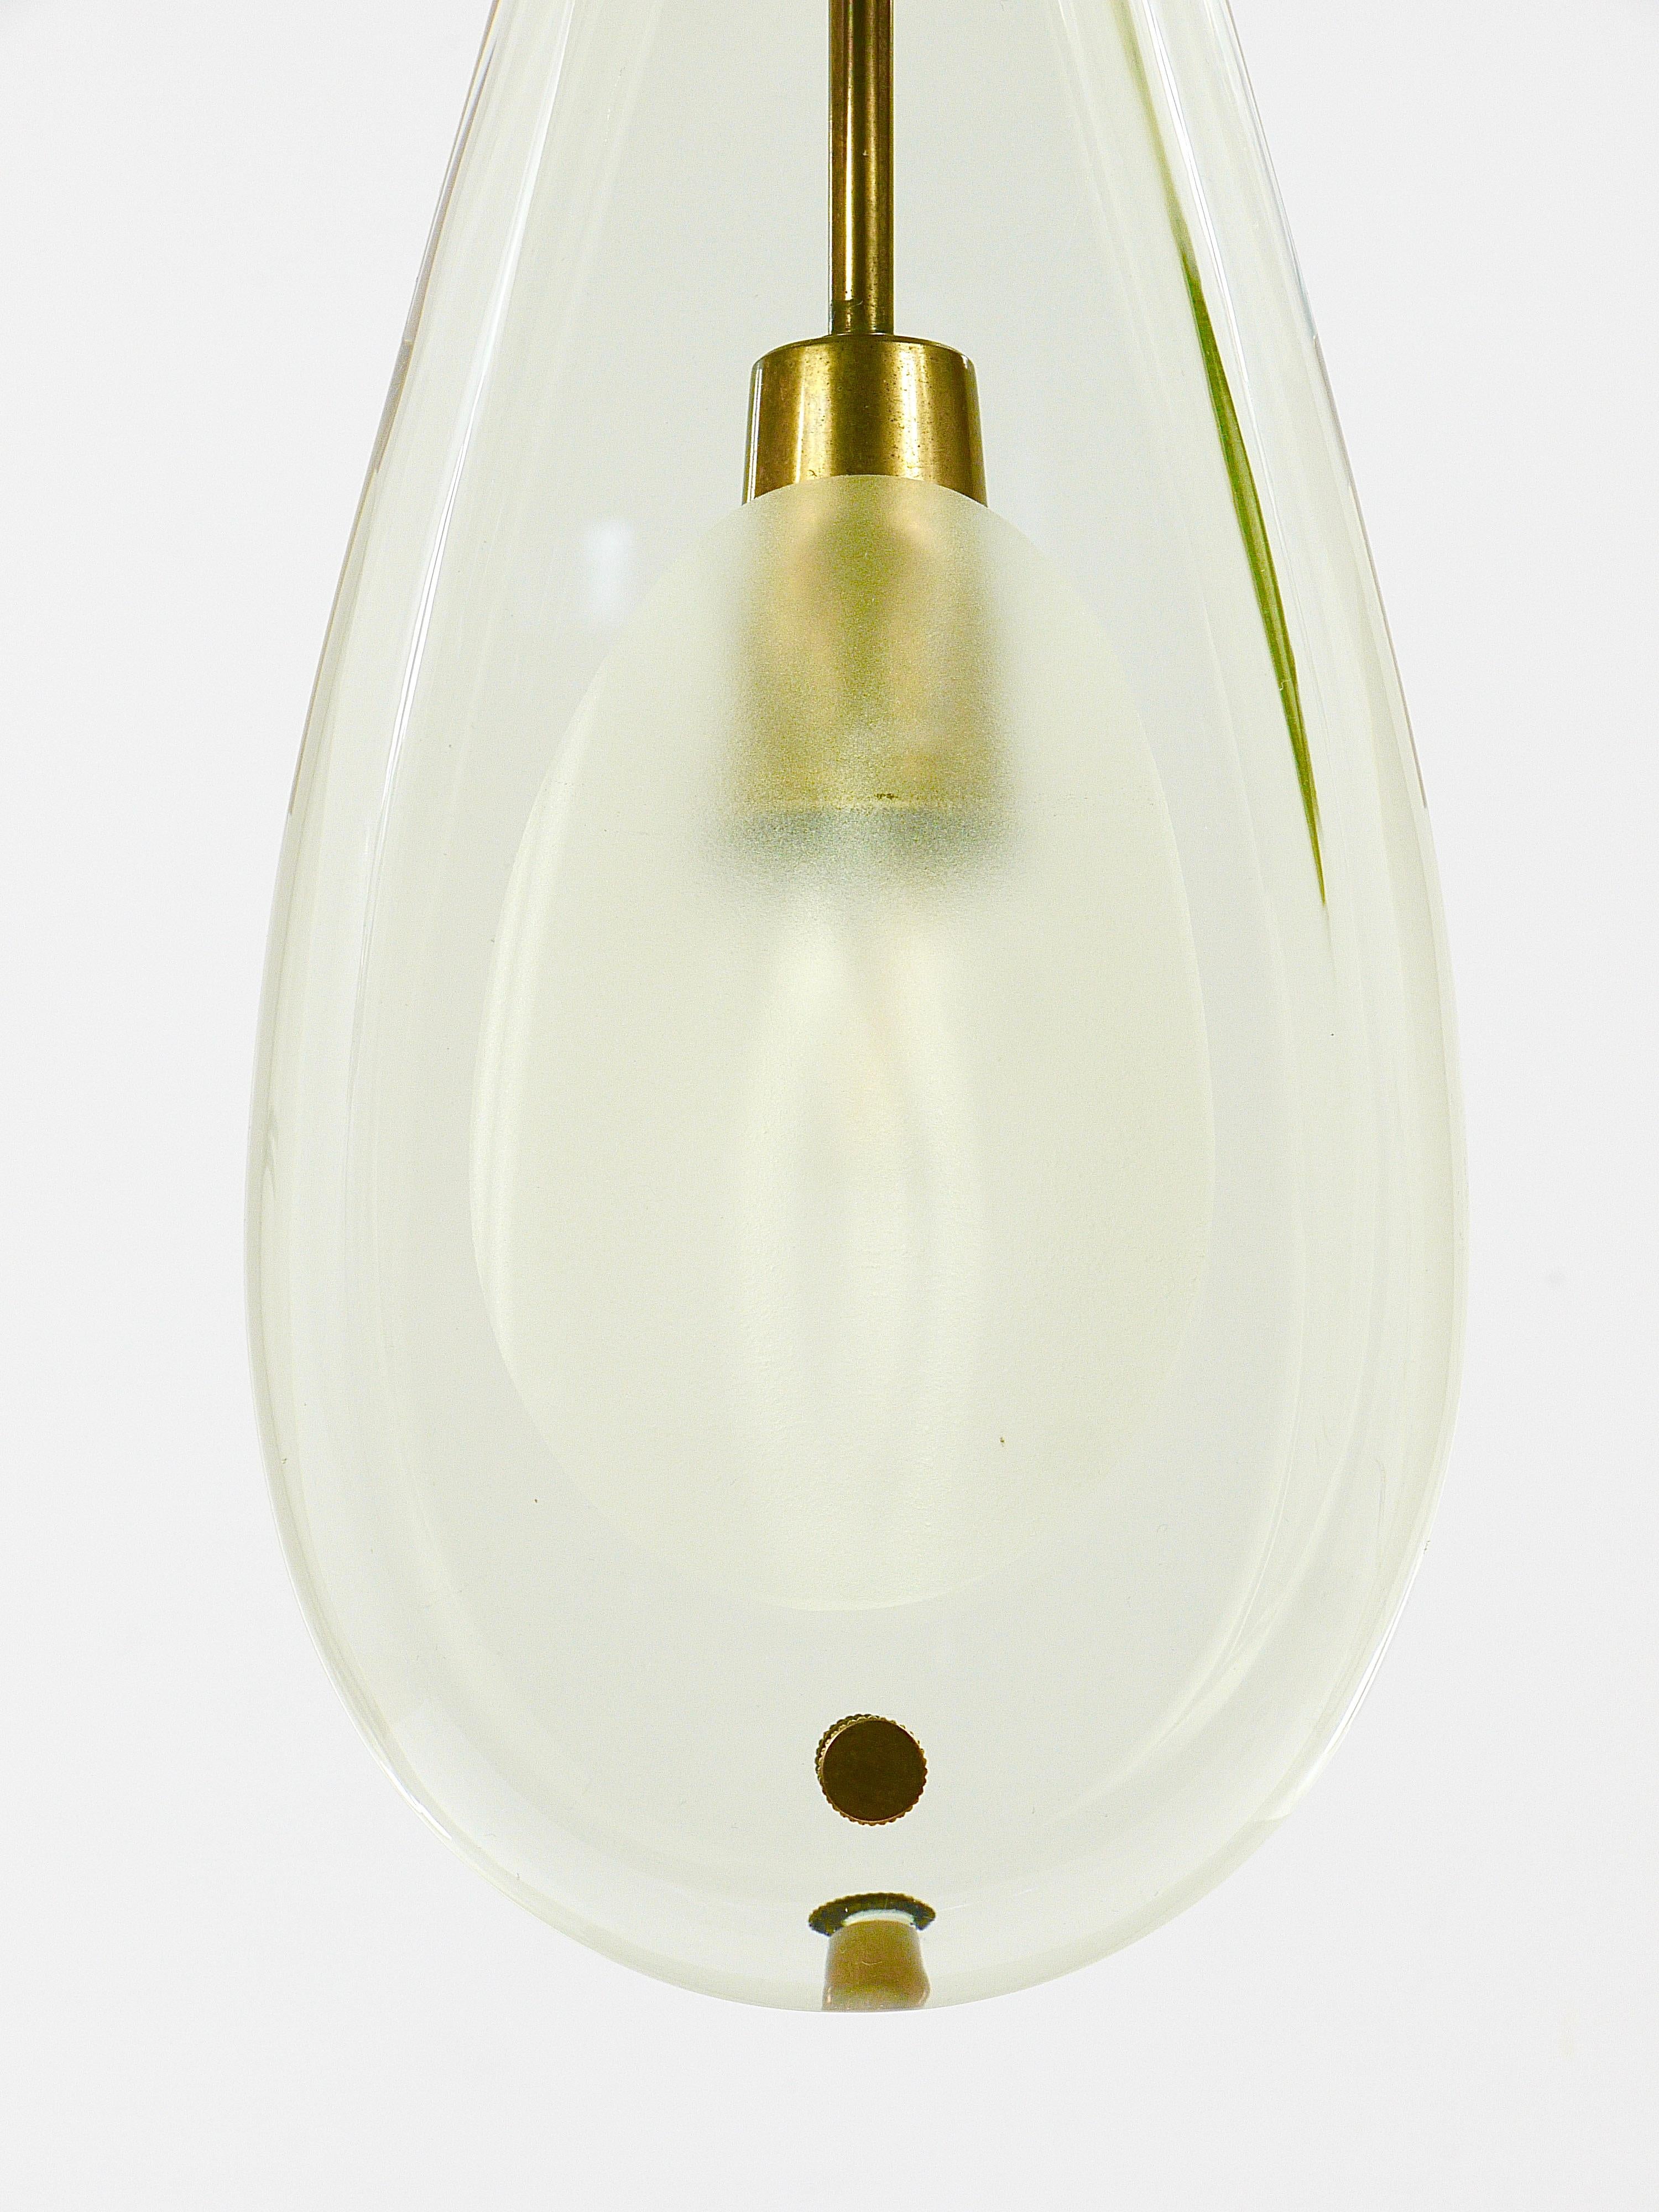 Max Ingrad For Fontana Arte Drop Pendant Lamp, Model 2259, Italy, 1960s For Sale 3